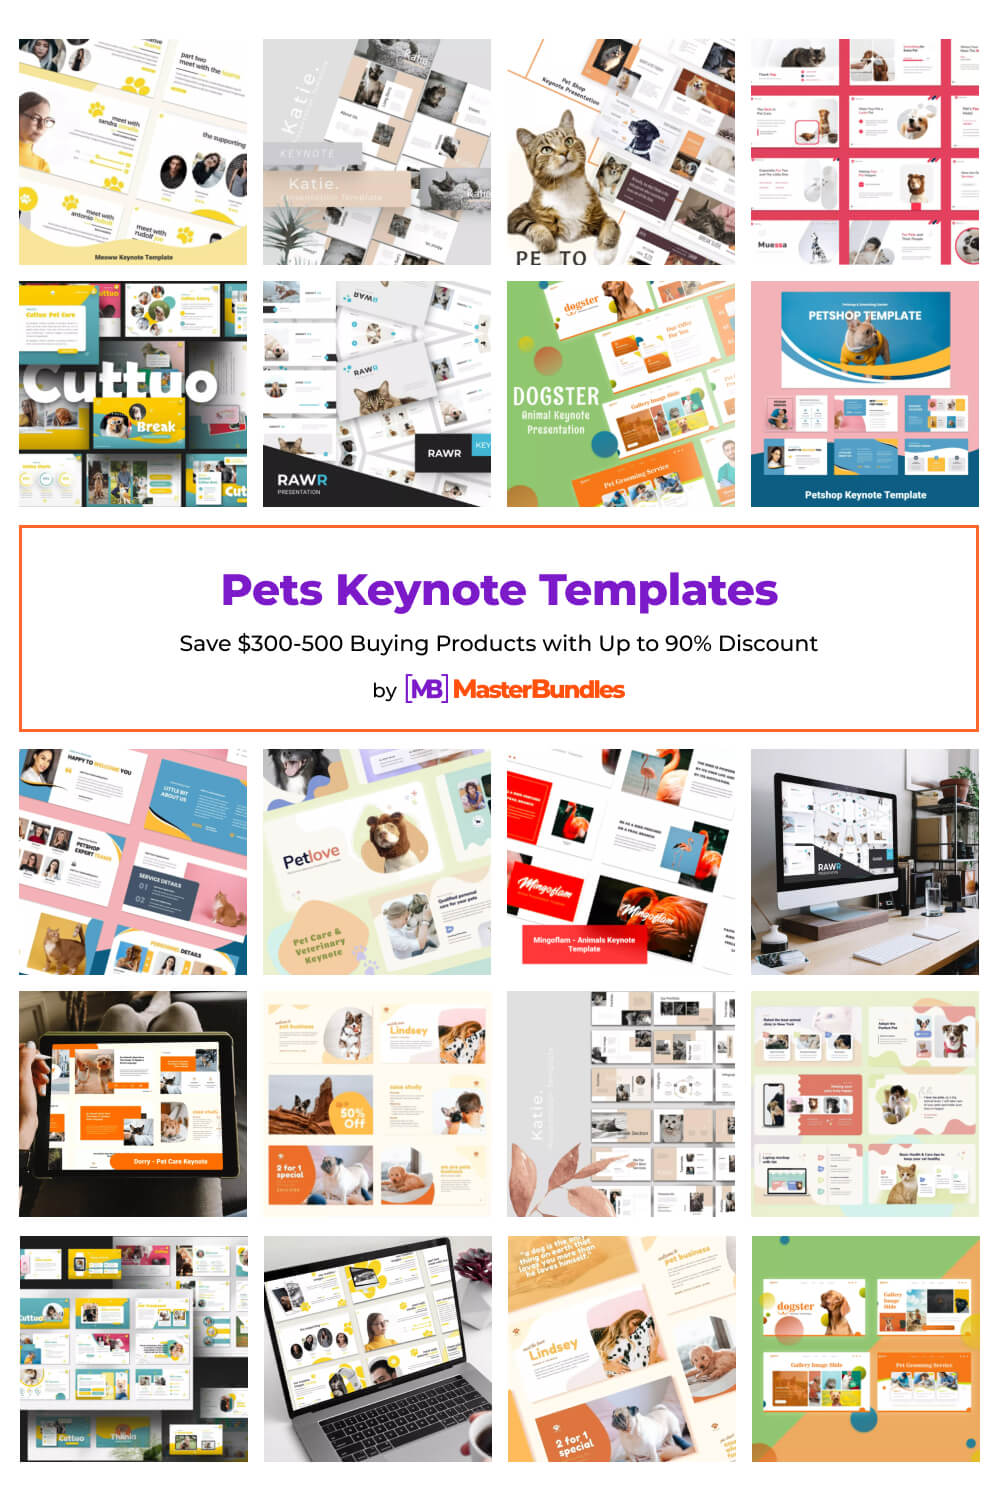 pets keynote templates pinterest image.